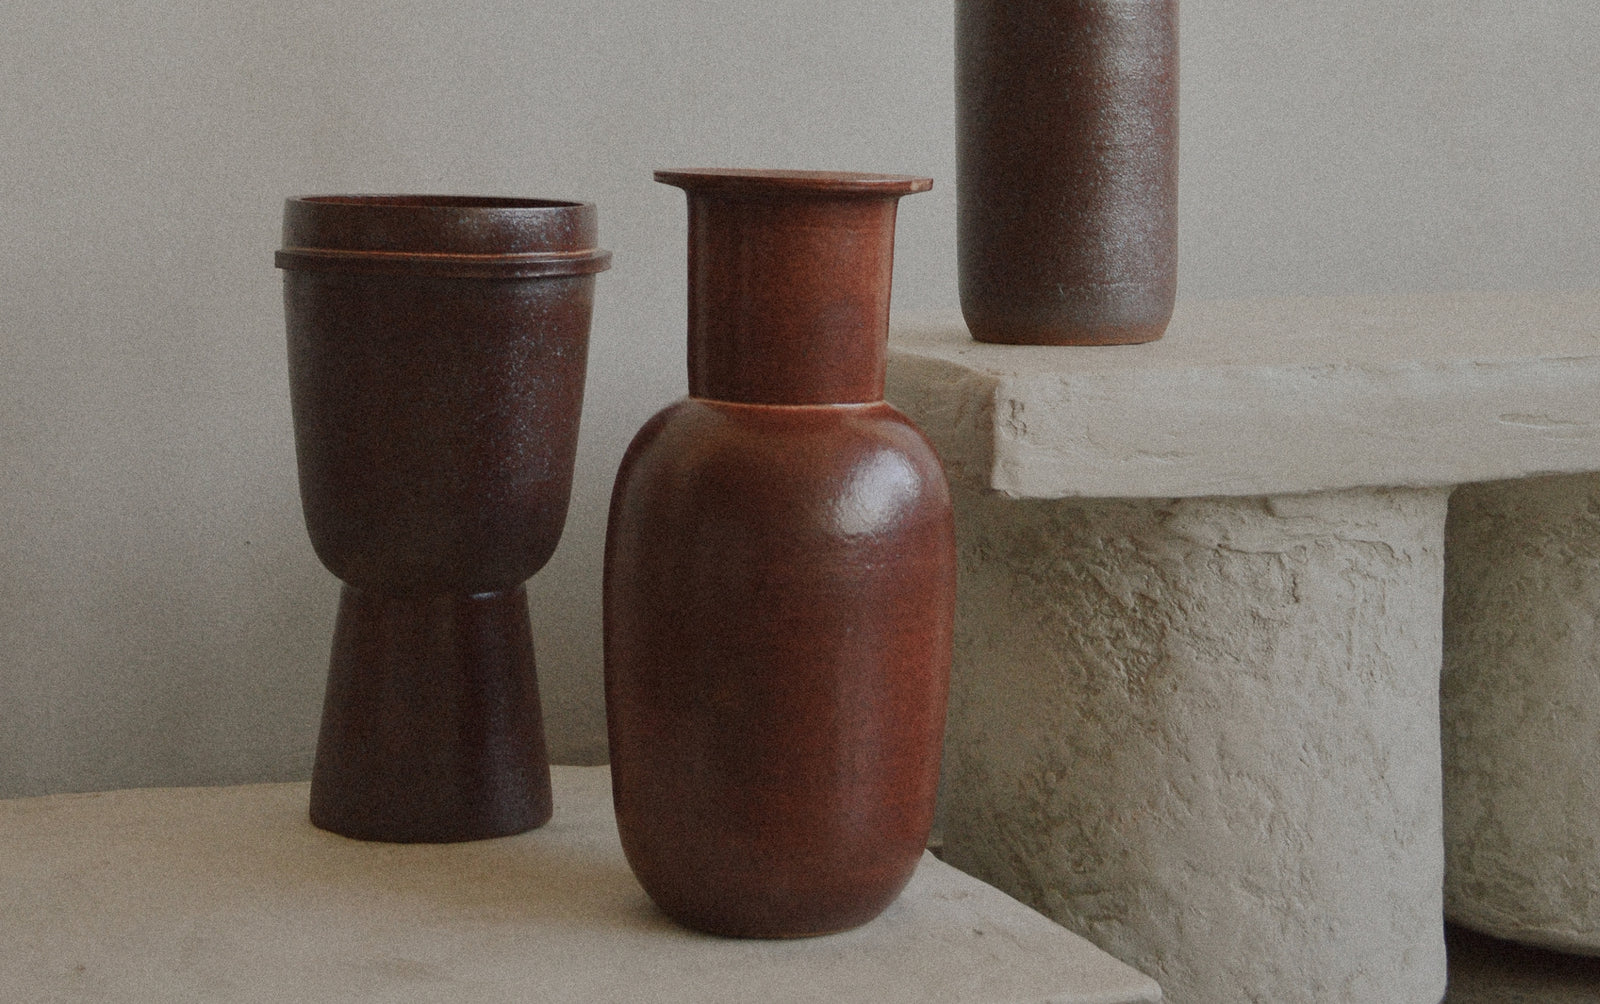 Ceramicah - Shino vessels on various pedestals